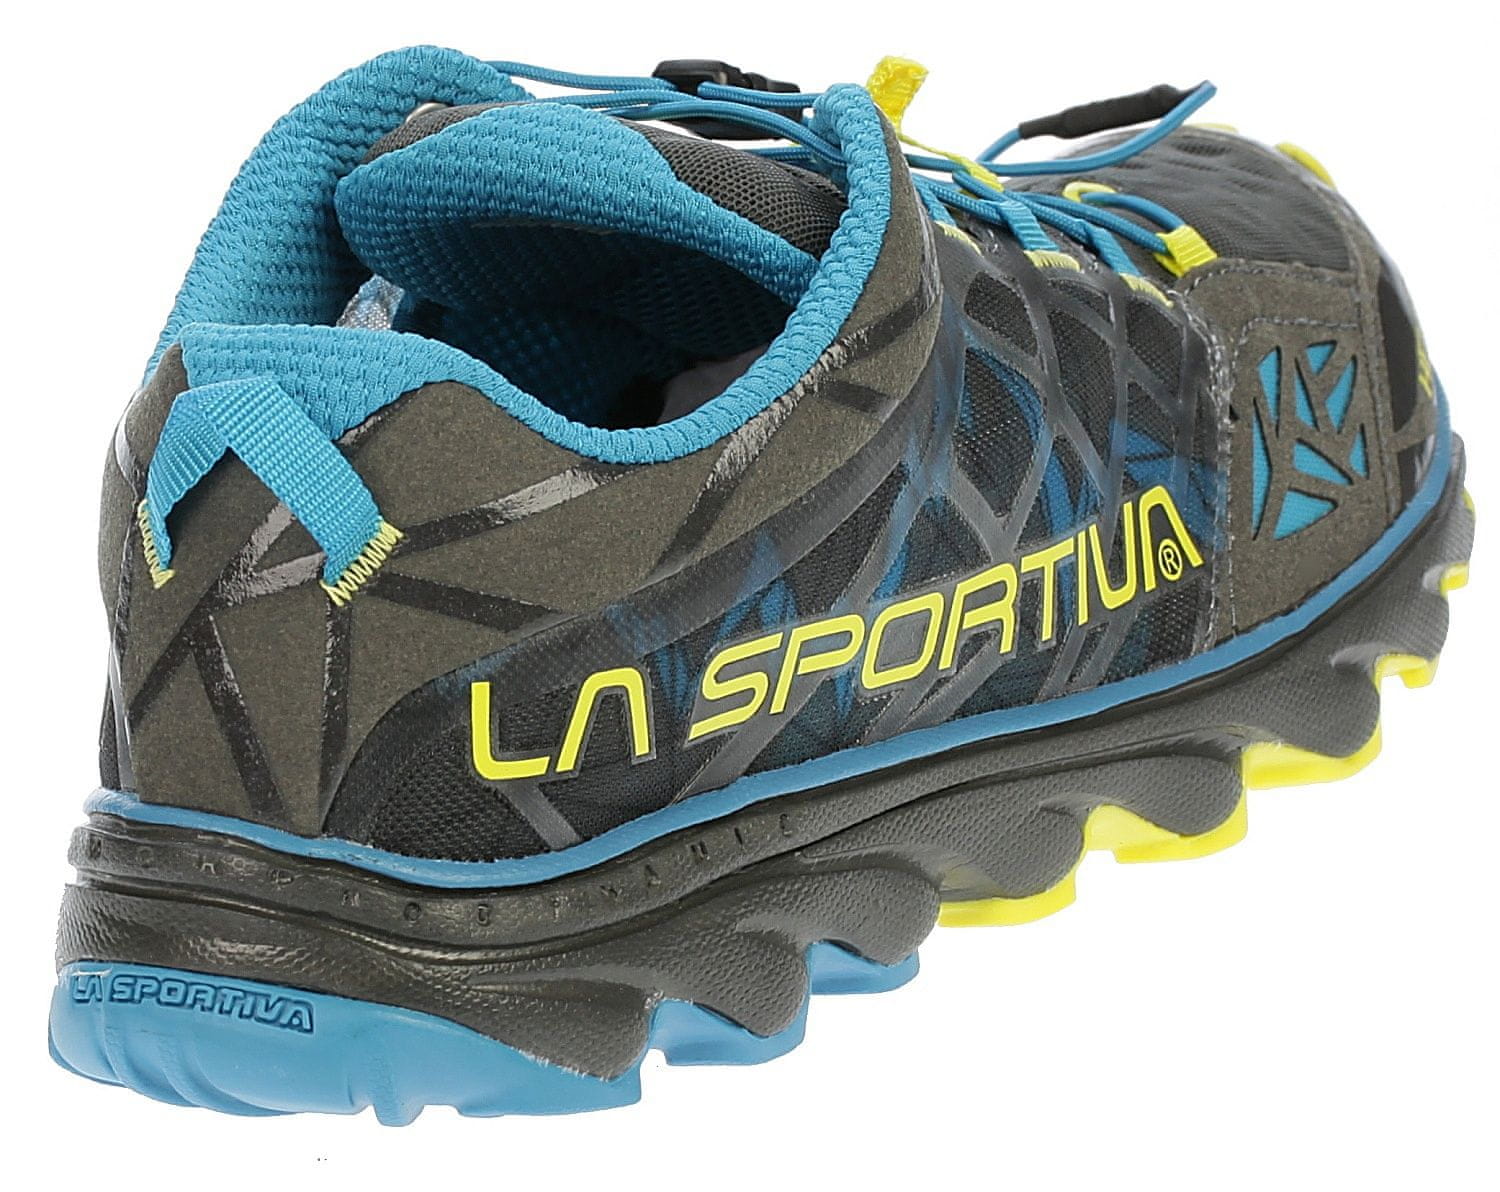 La shoe обувь. La Sportiva Highlander. Хелиос обувь. La Sportiva Canyon kaina. Реклама ботинок la Sportiva.